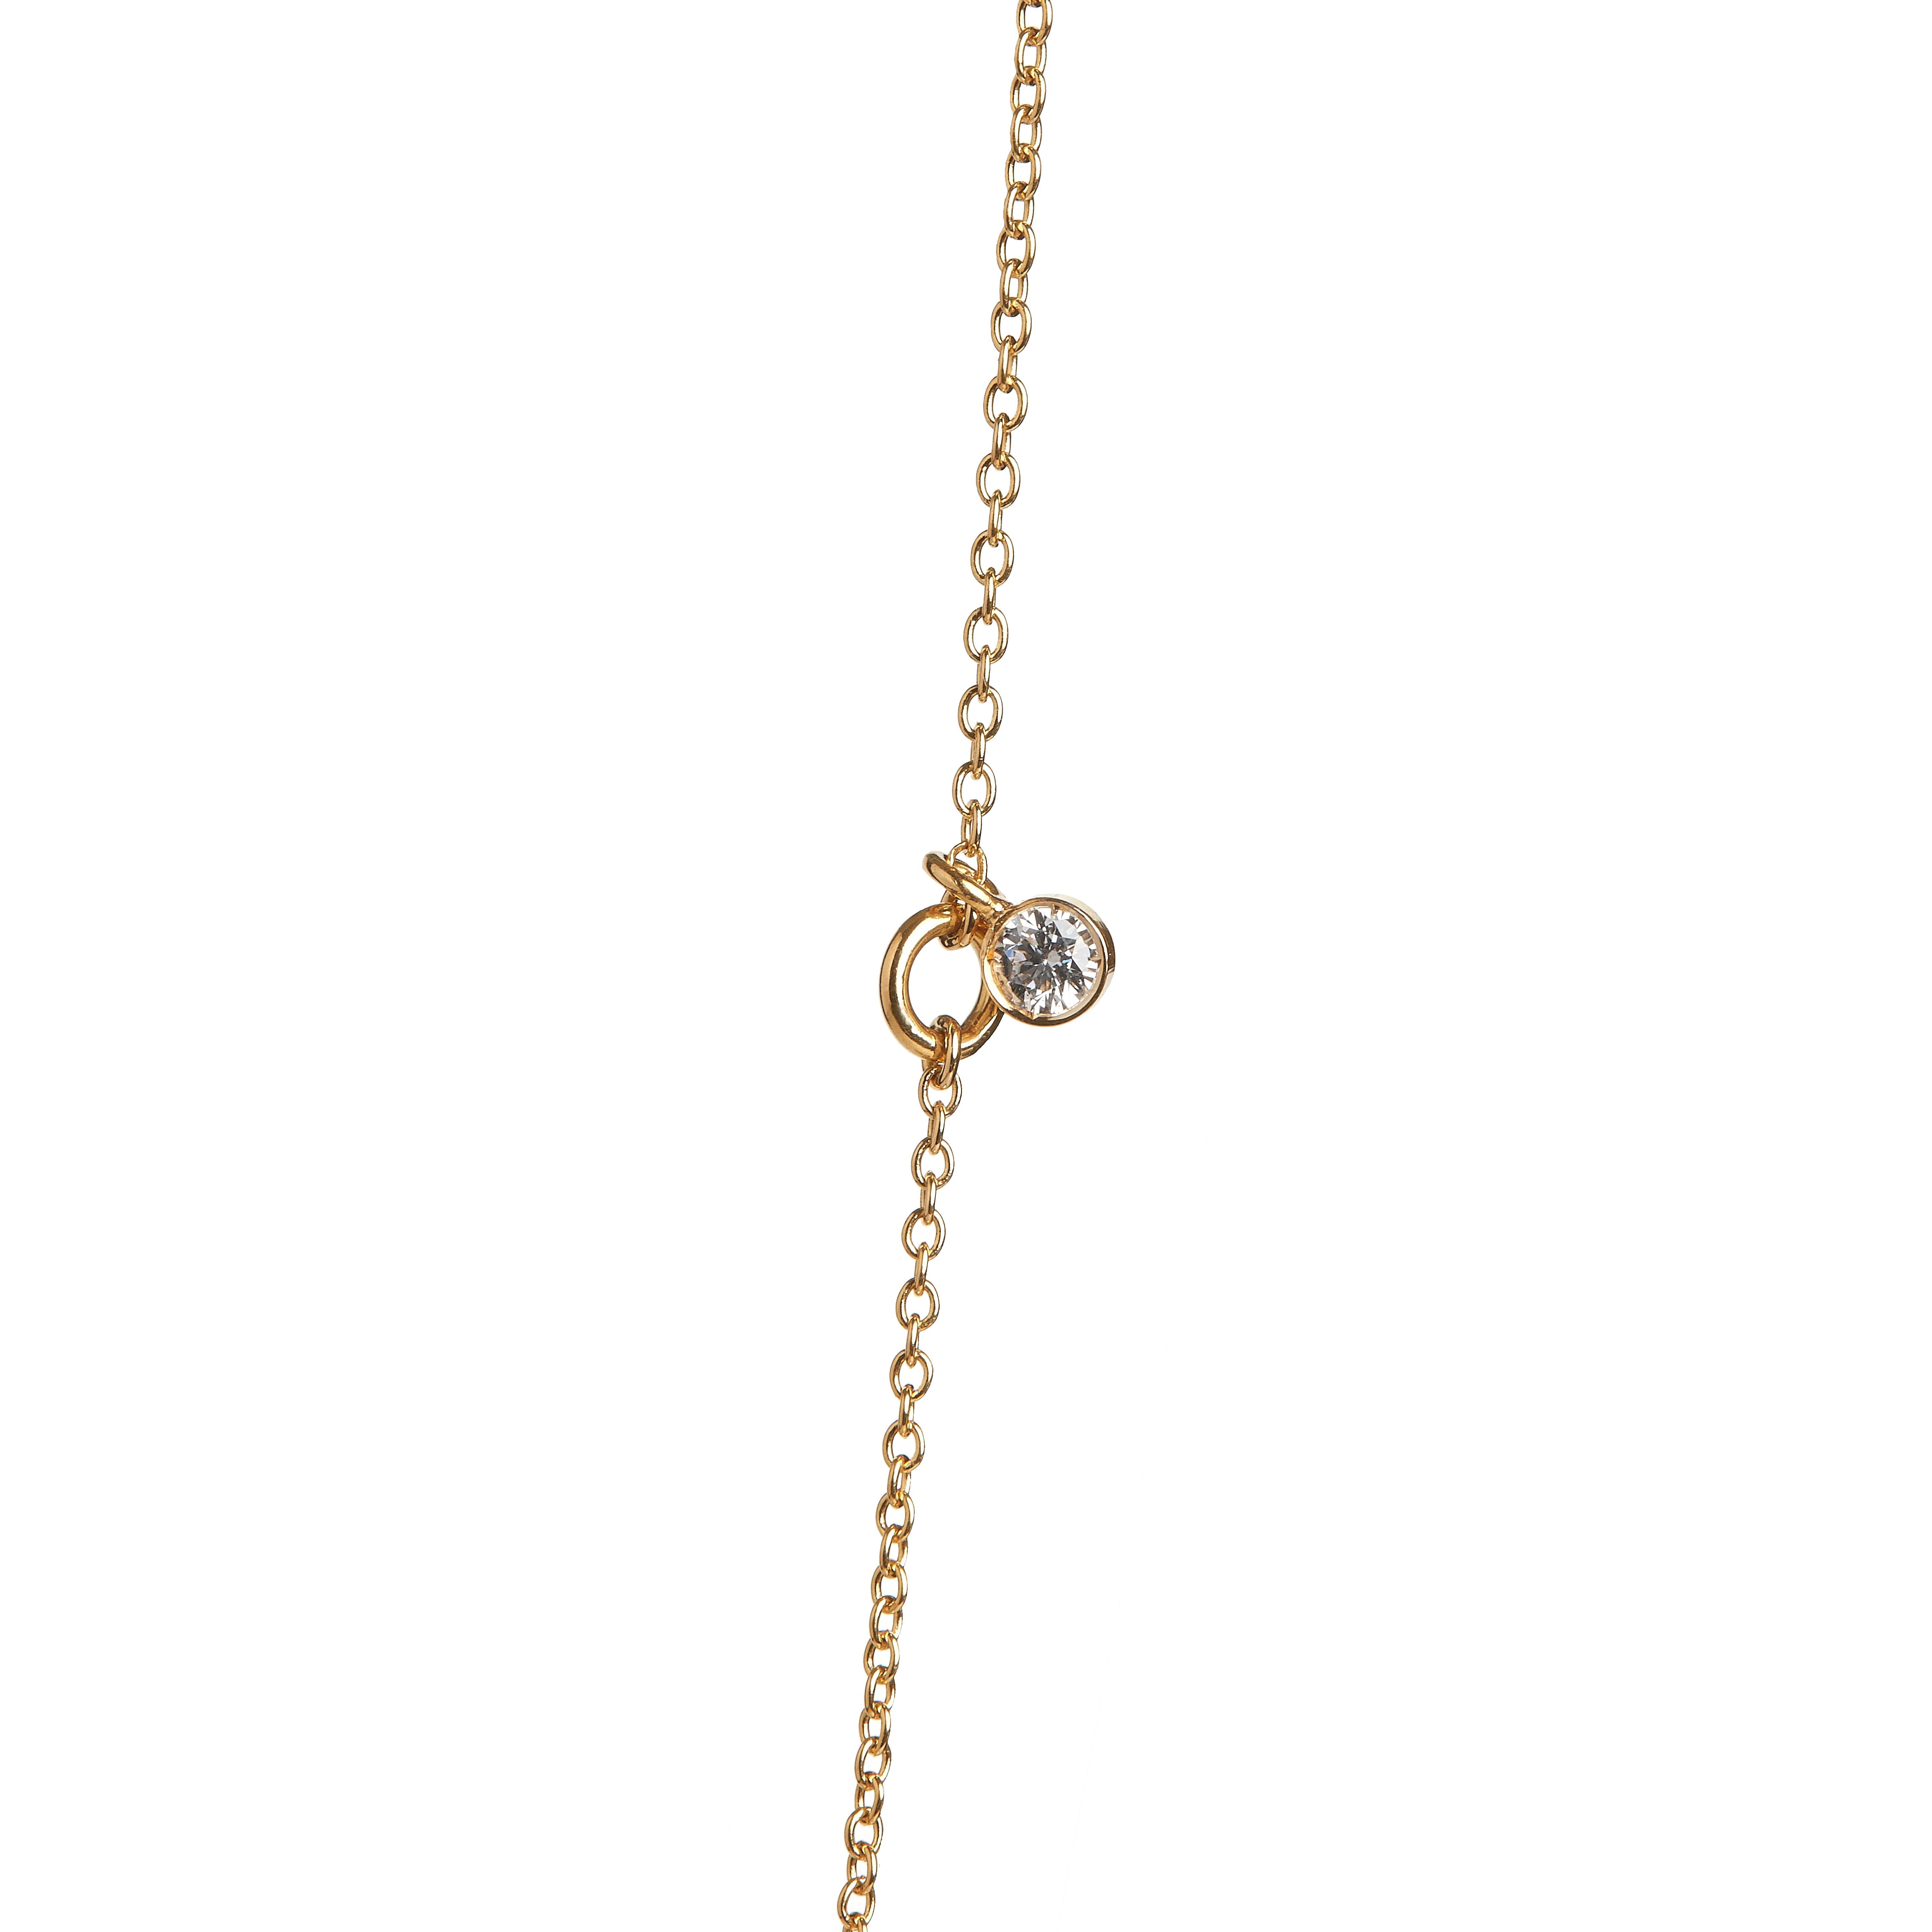 Nathalie Jean Contemporary 0.33 Carat Diamond Gold Pendant Chain Necklace For Sale 5